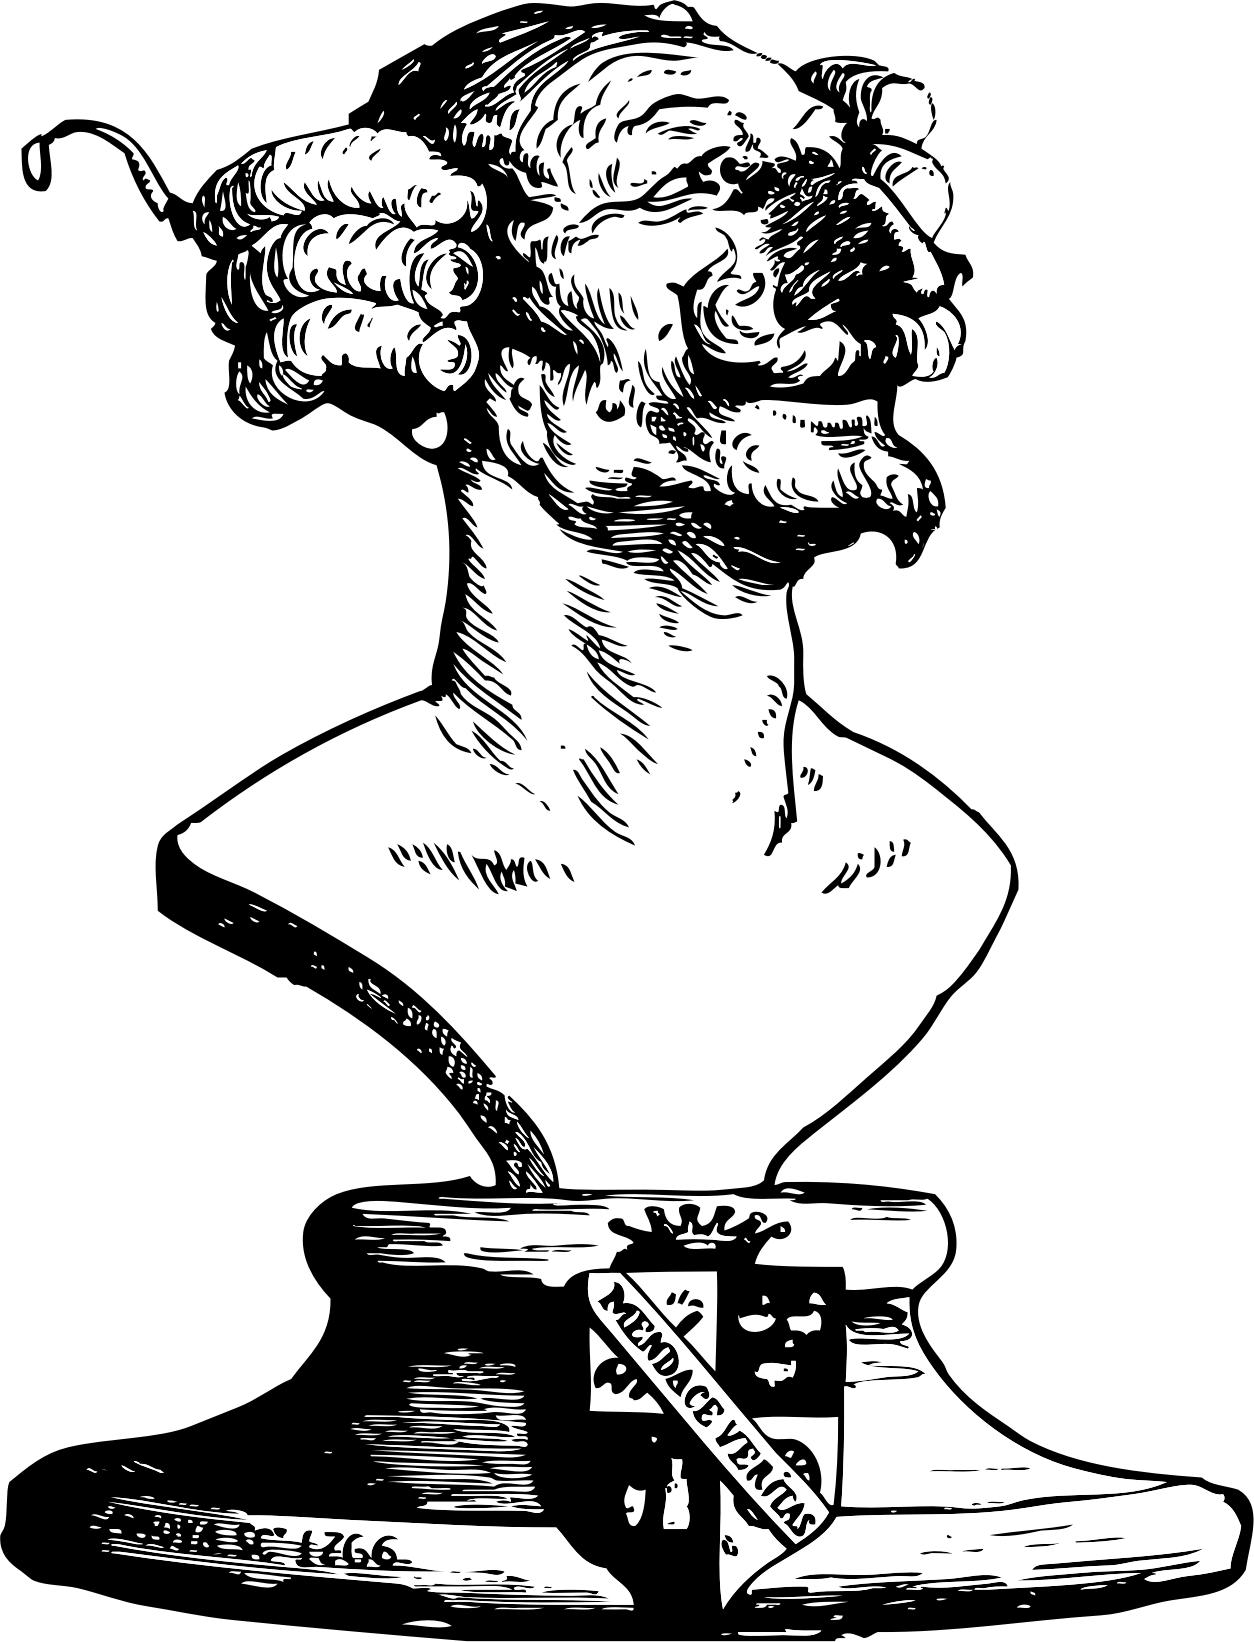 The bust of Baron von Munchausen png